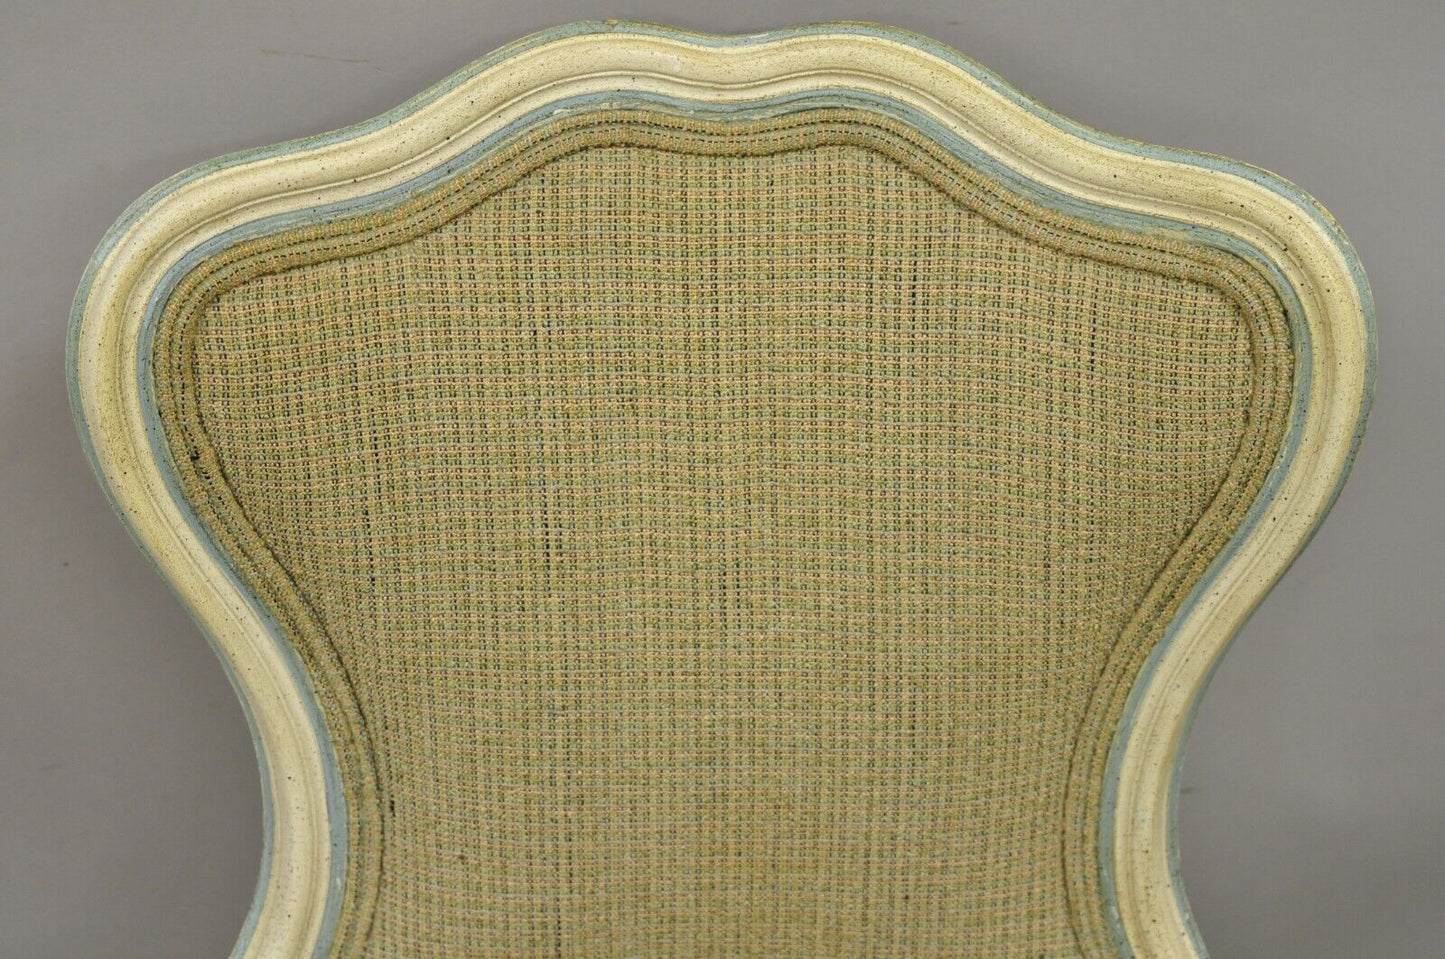 French Provincial Louis XV Cream Blue Hiprest Boudoir Slipper Chairs - a Pair